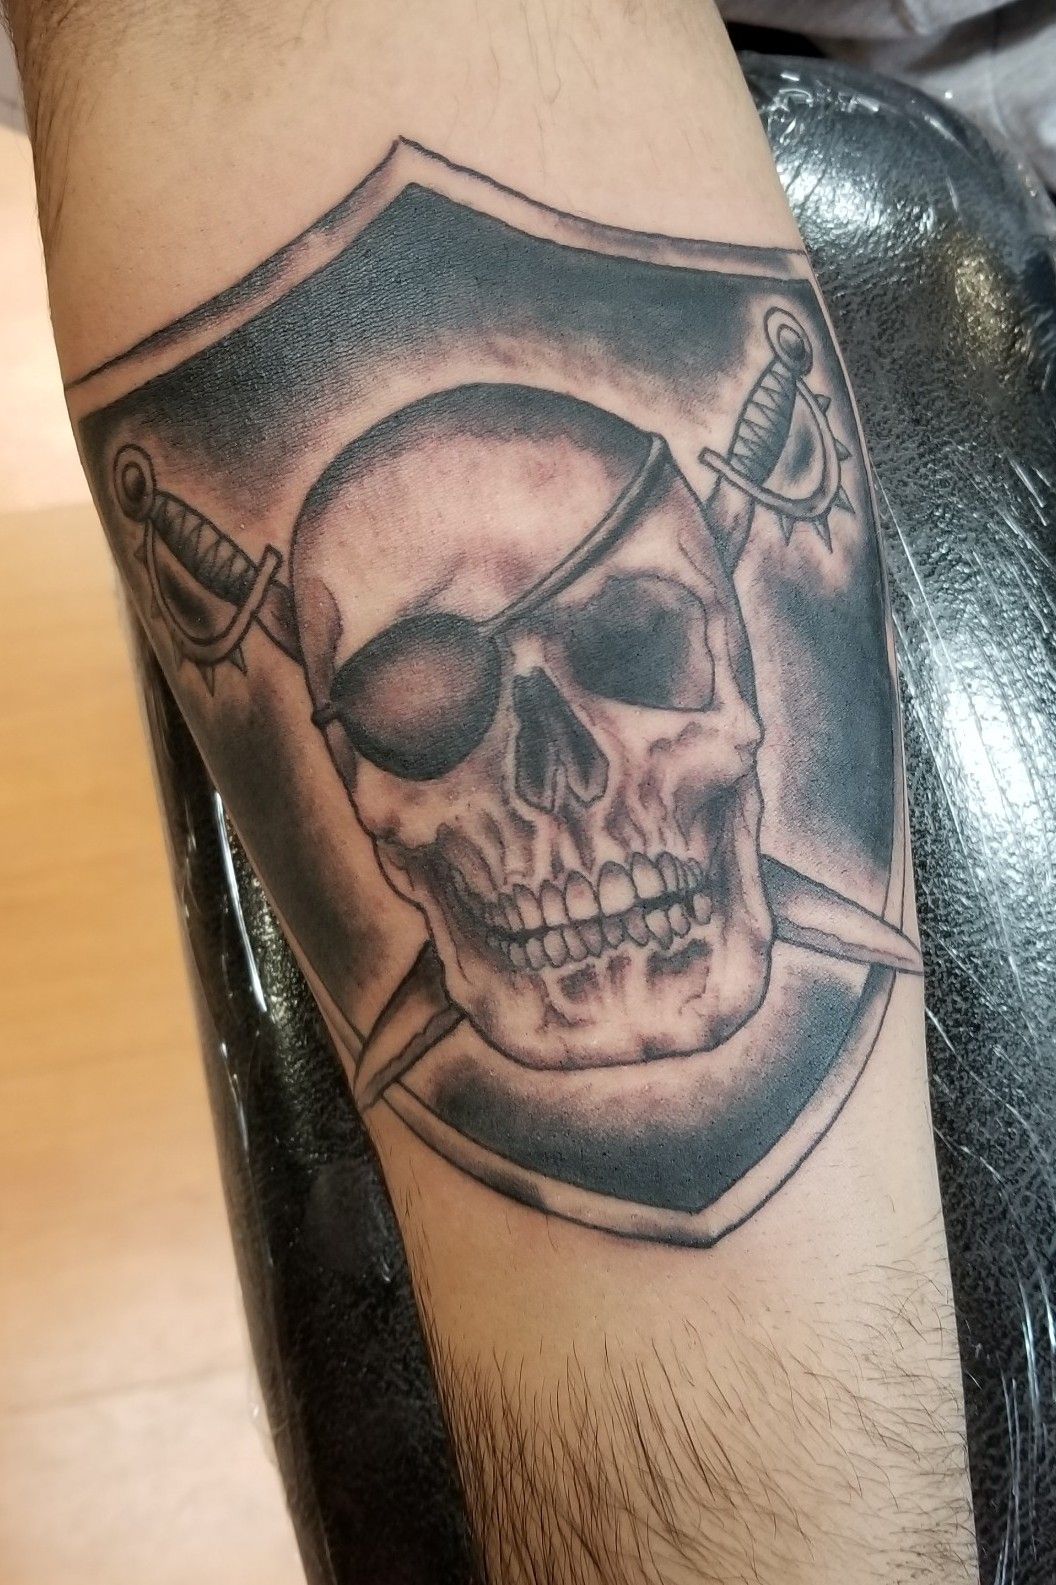 raider tattoo done by Rambo at Federal Ink Tattoo in isleton Ca  rtattoo